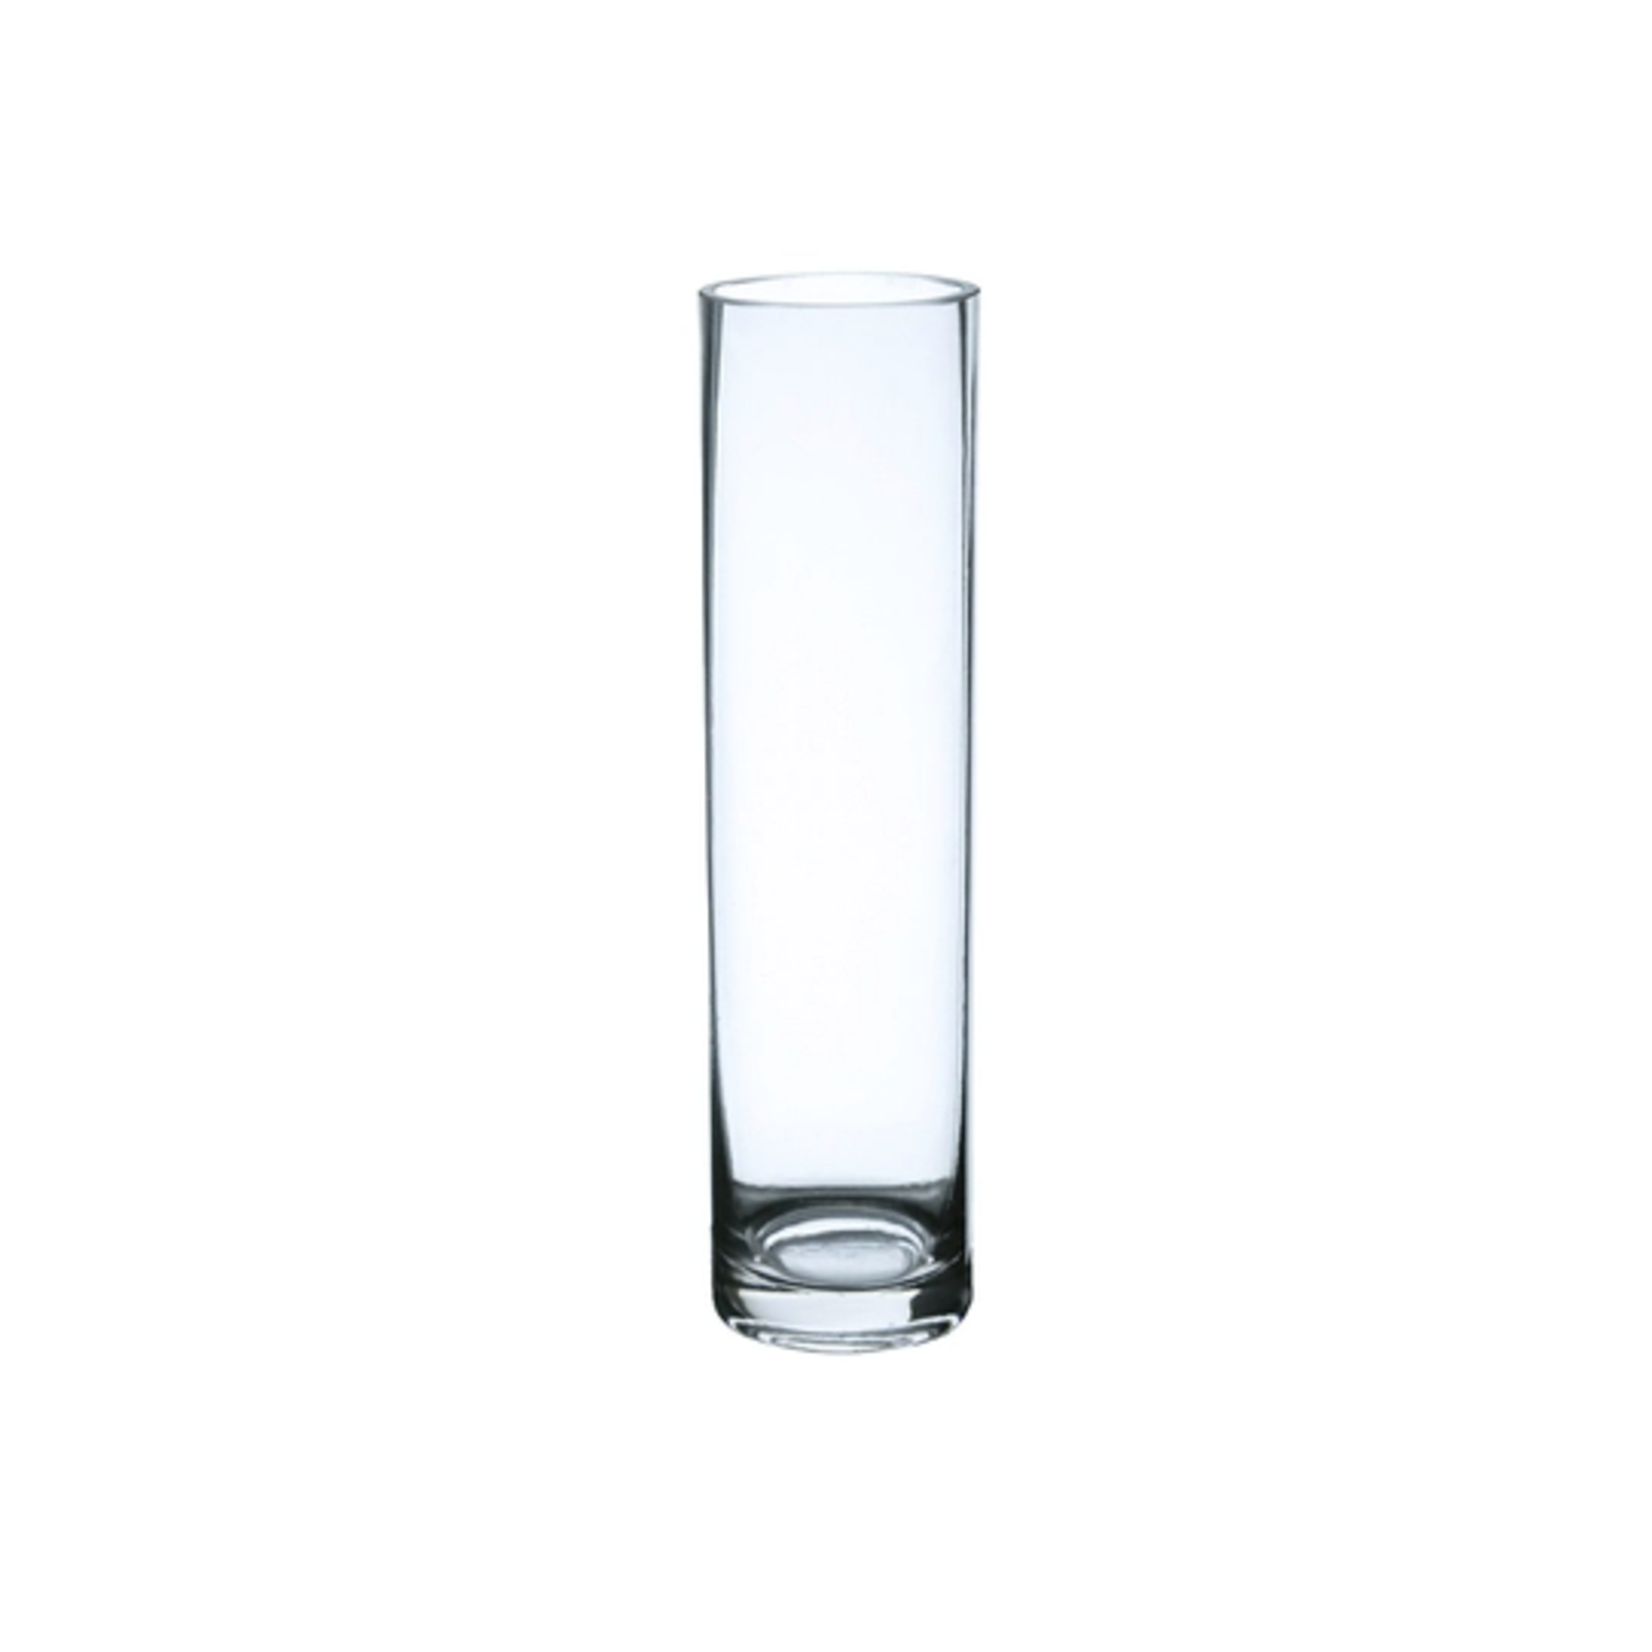 8"h x 2"d THICK GLASS BUDVASE CYLINDER